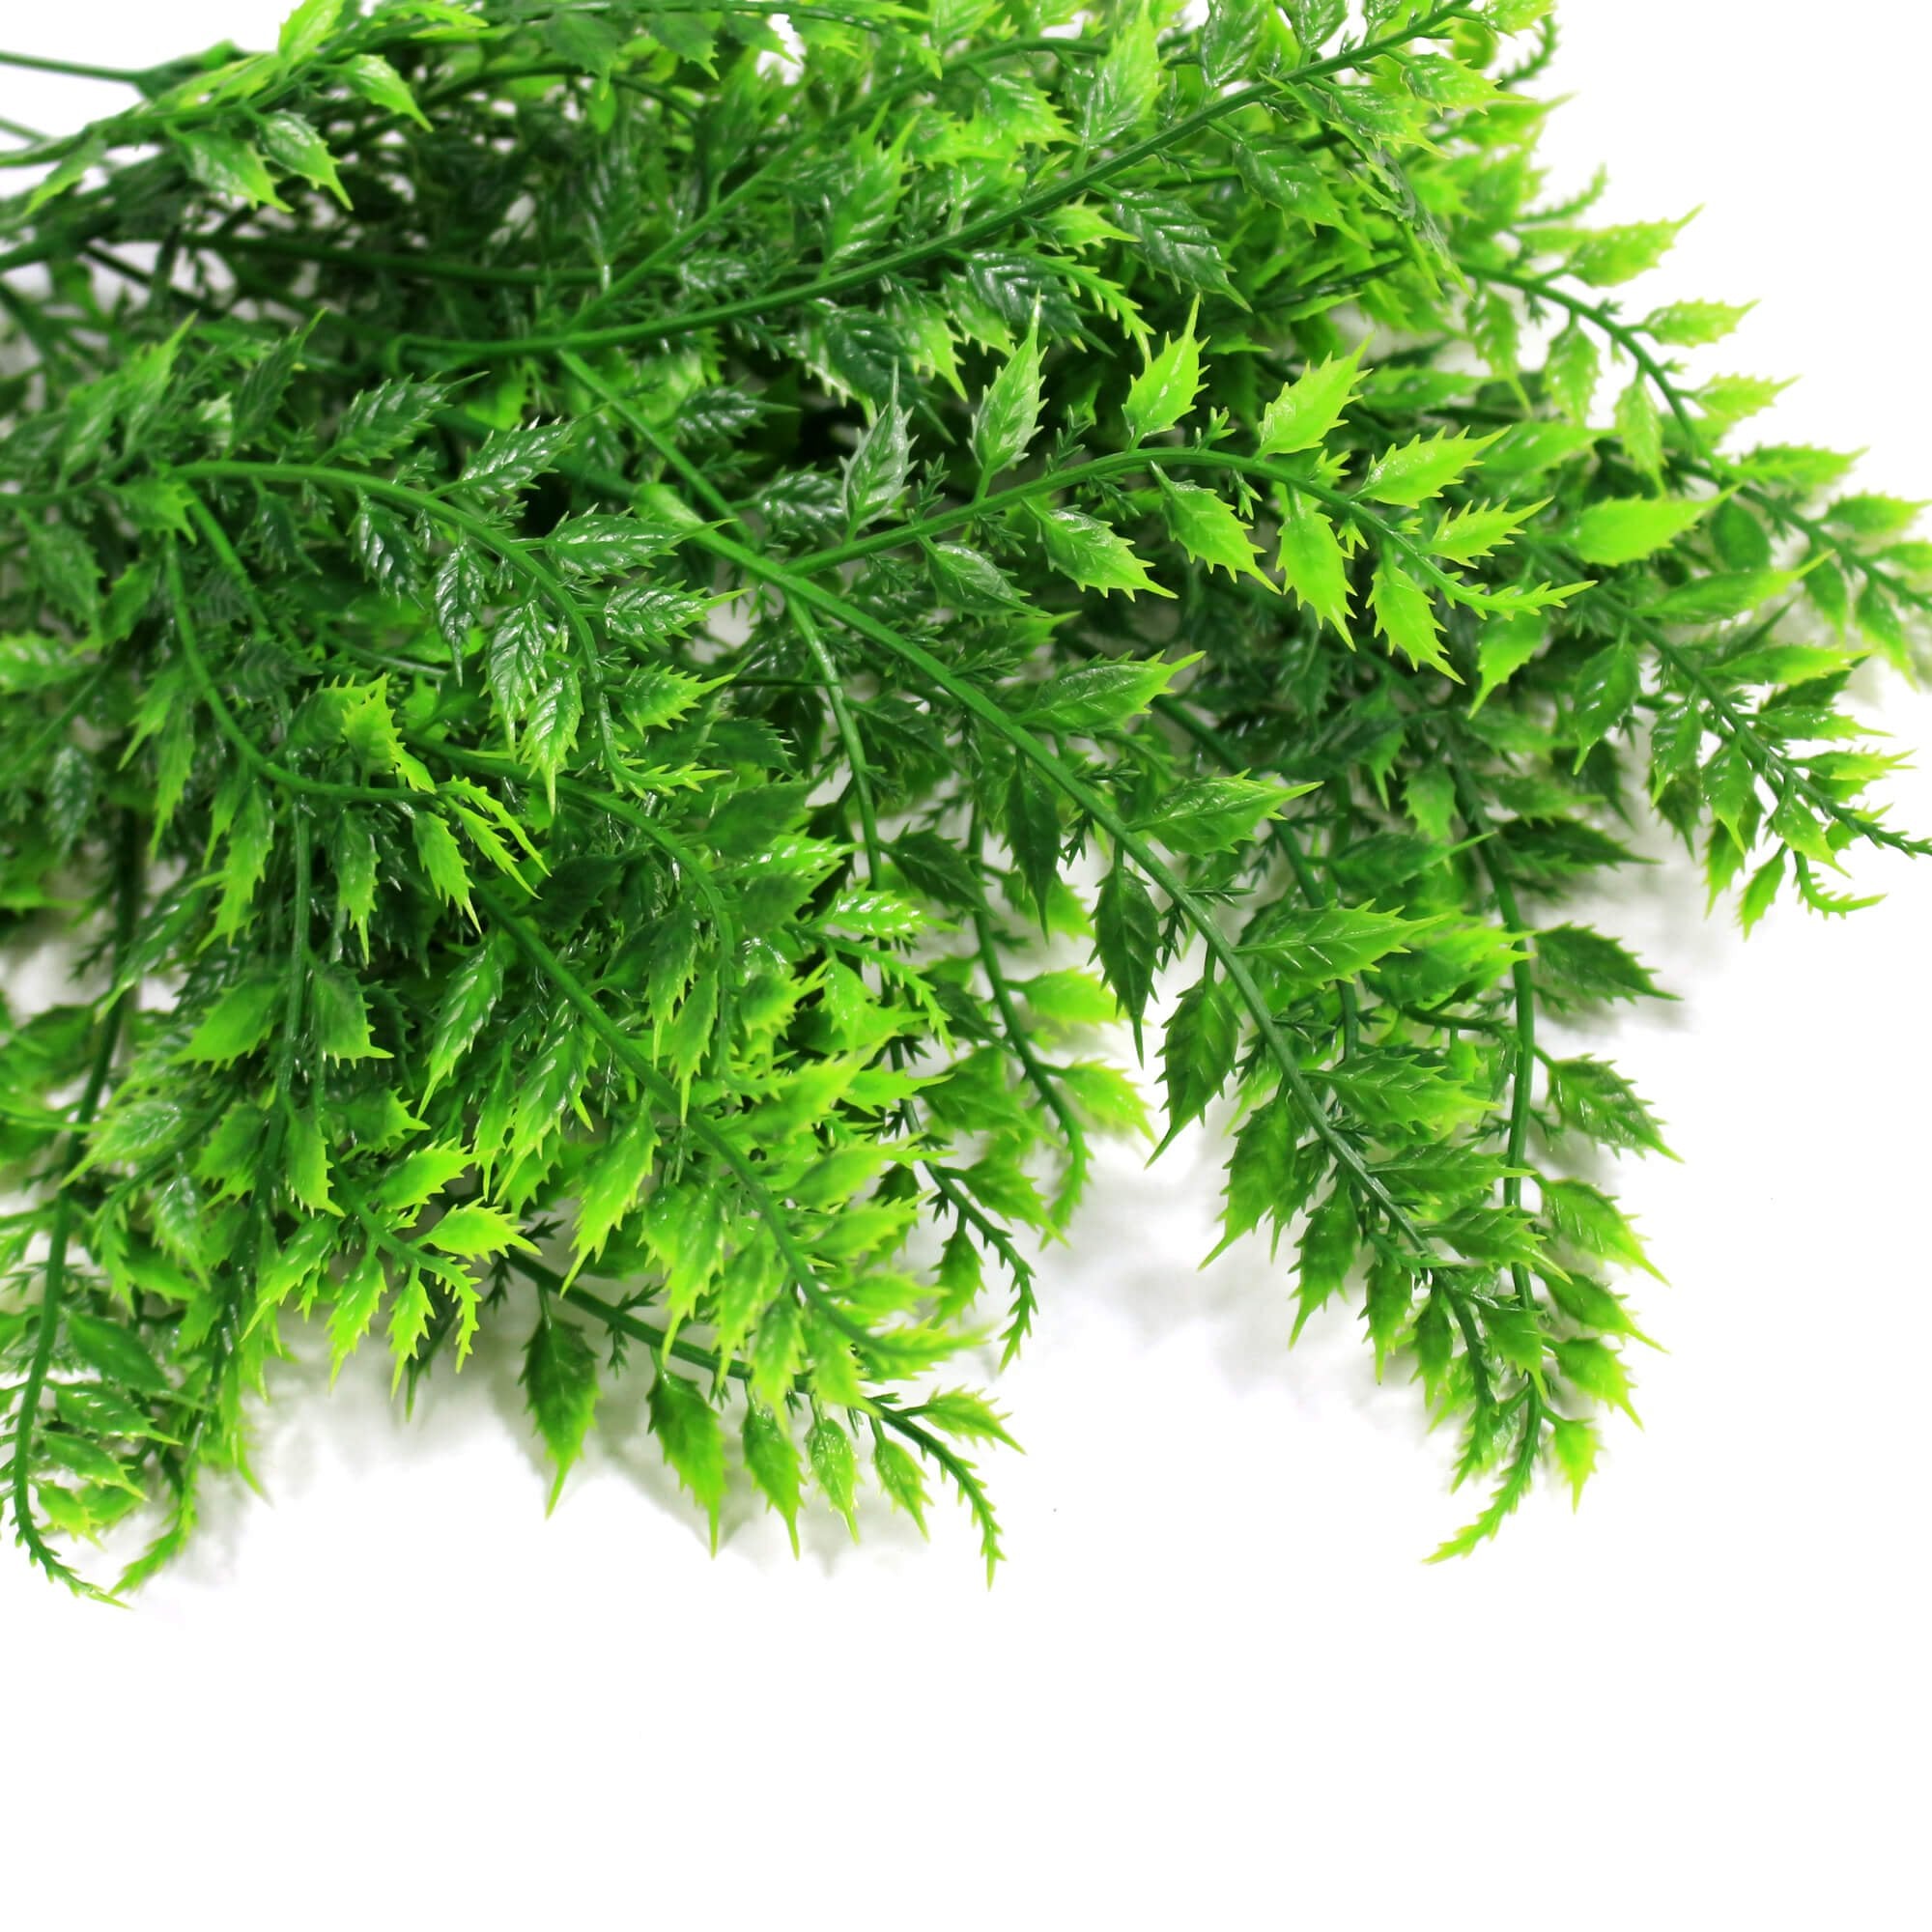 Artificial Mediterranean Stem UV 30cm - Designer Vertical Gardens fake plant stem Stems / Ferns